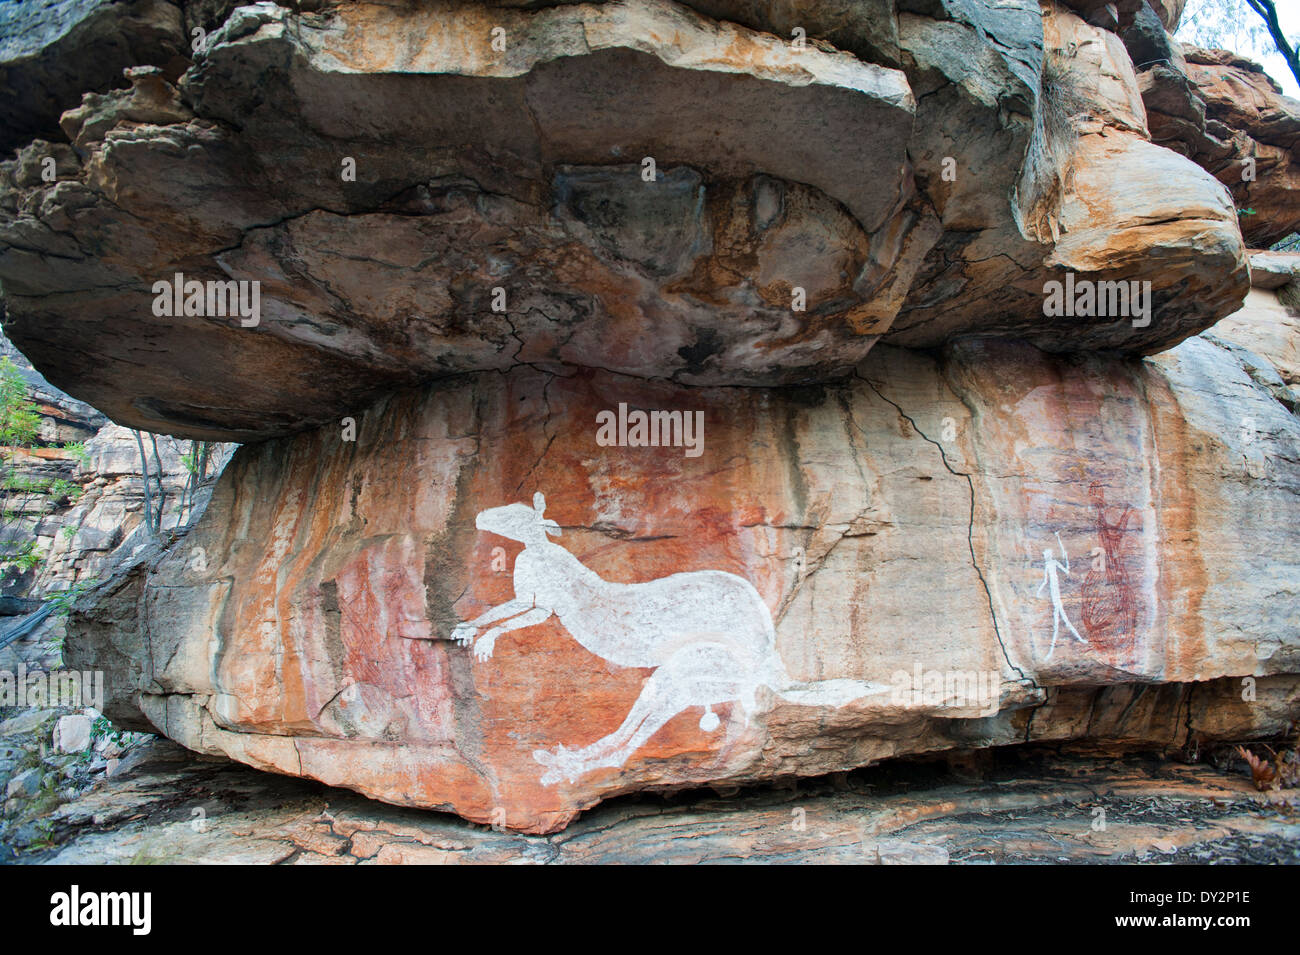 Arte rupestre, Warddeken indigeni Area Protetta, Australia Foto Stock